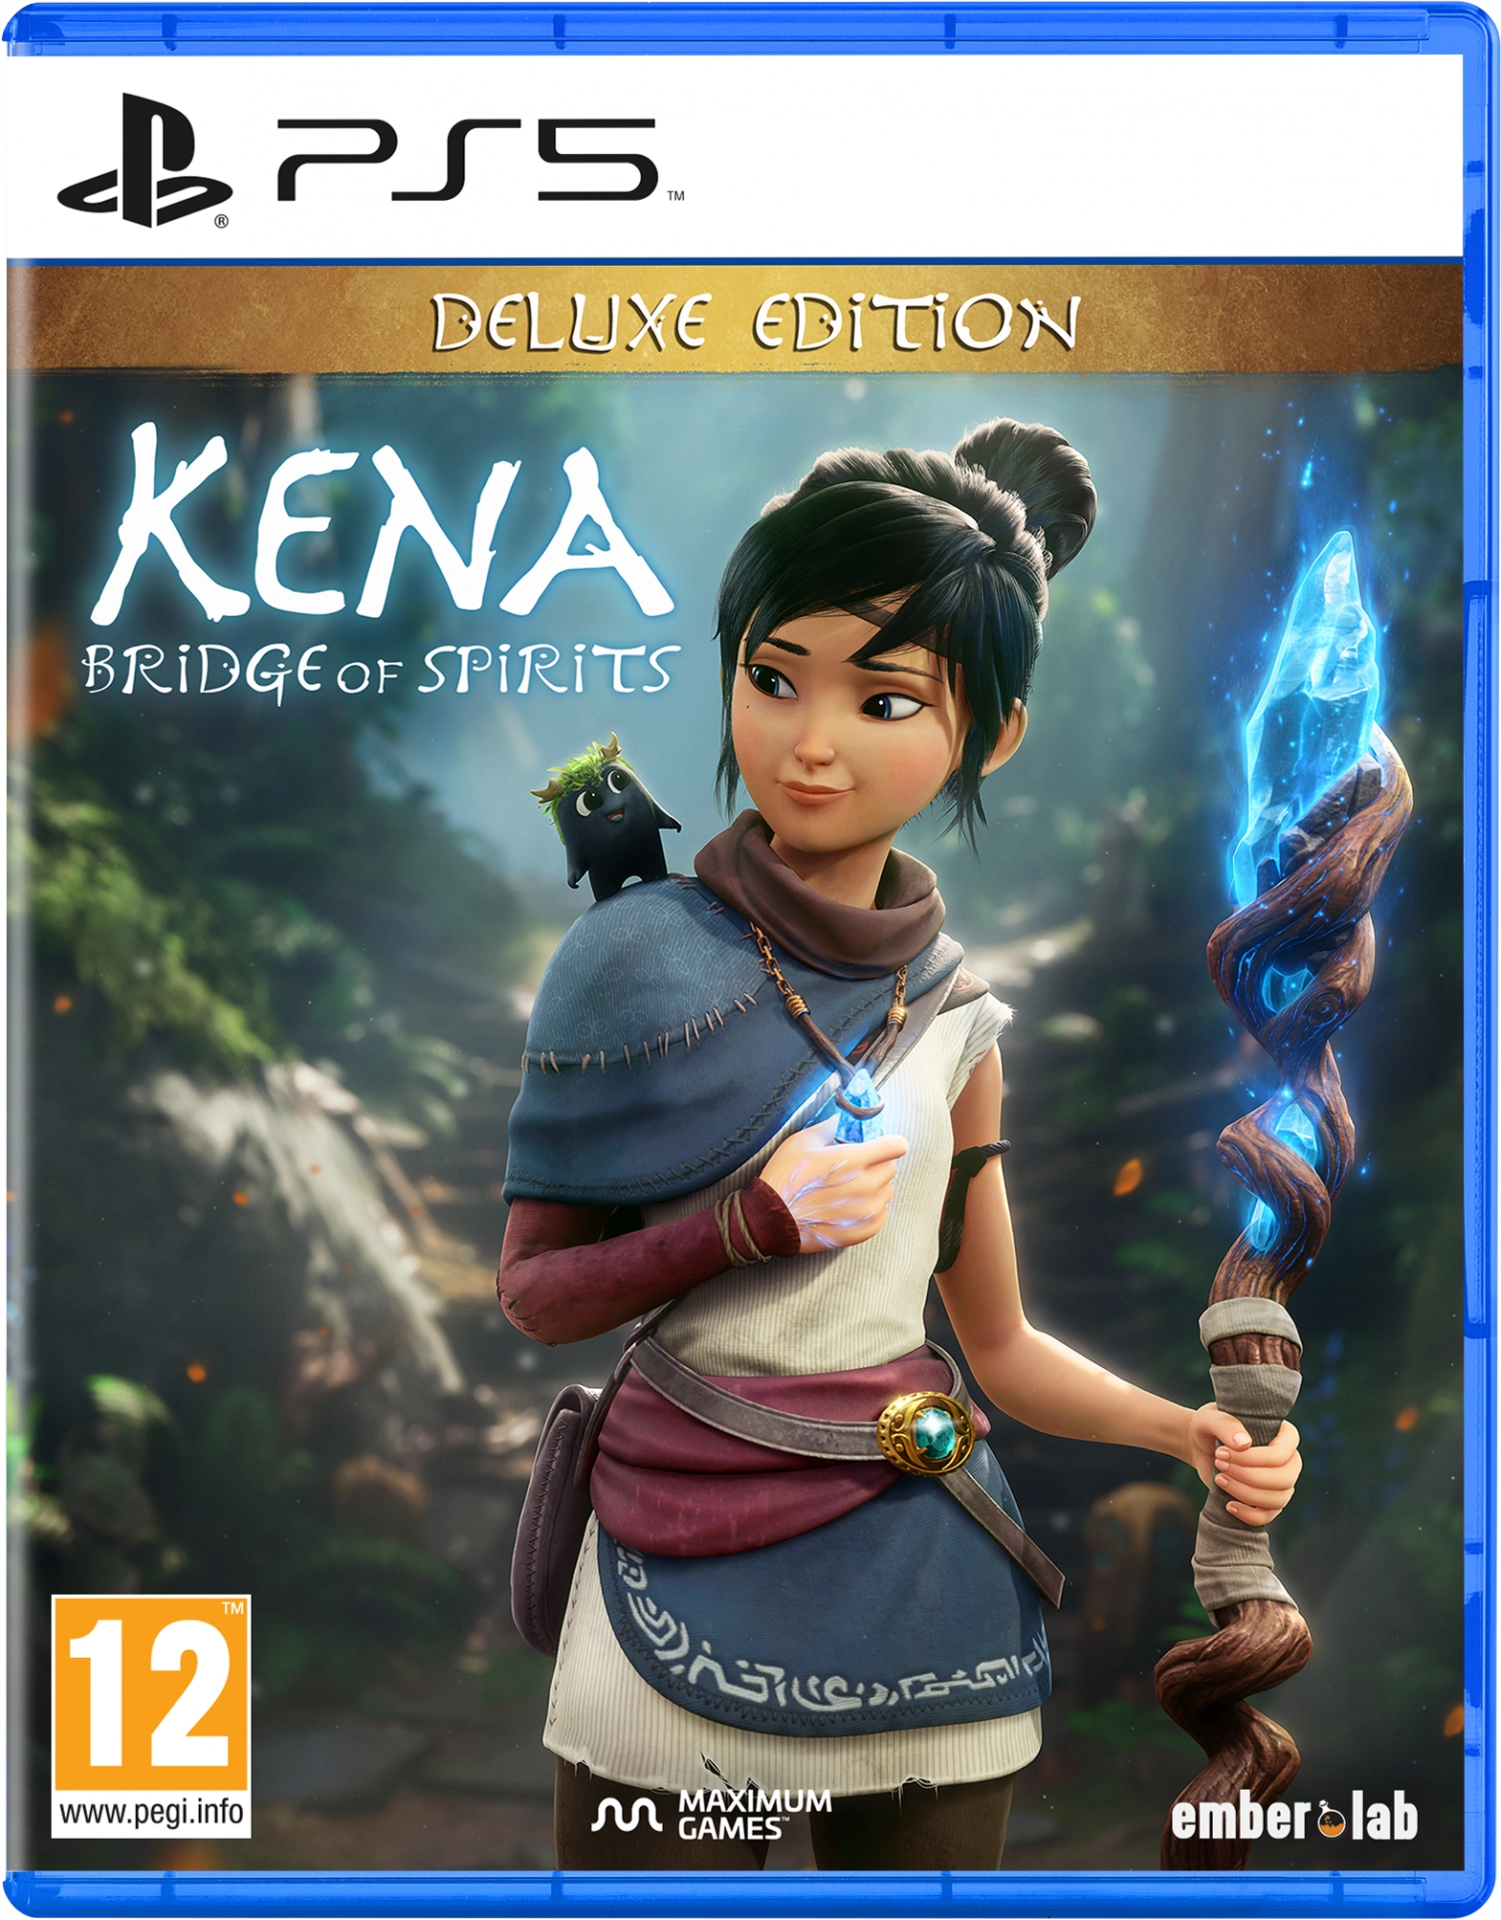 Kena: Bridge of Spirits - Deluxe Edition (PS5), Maximum Games